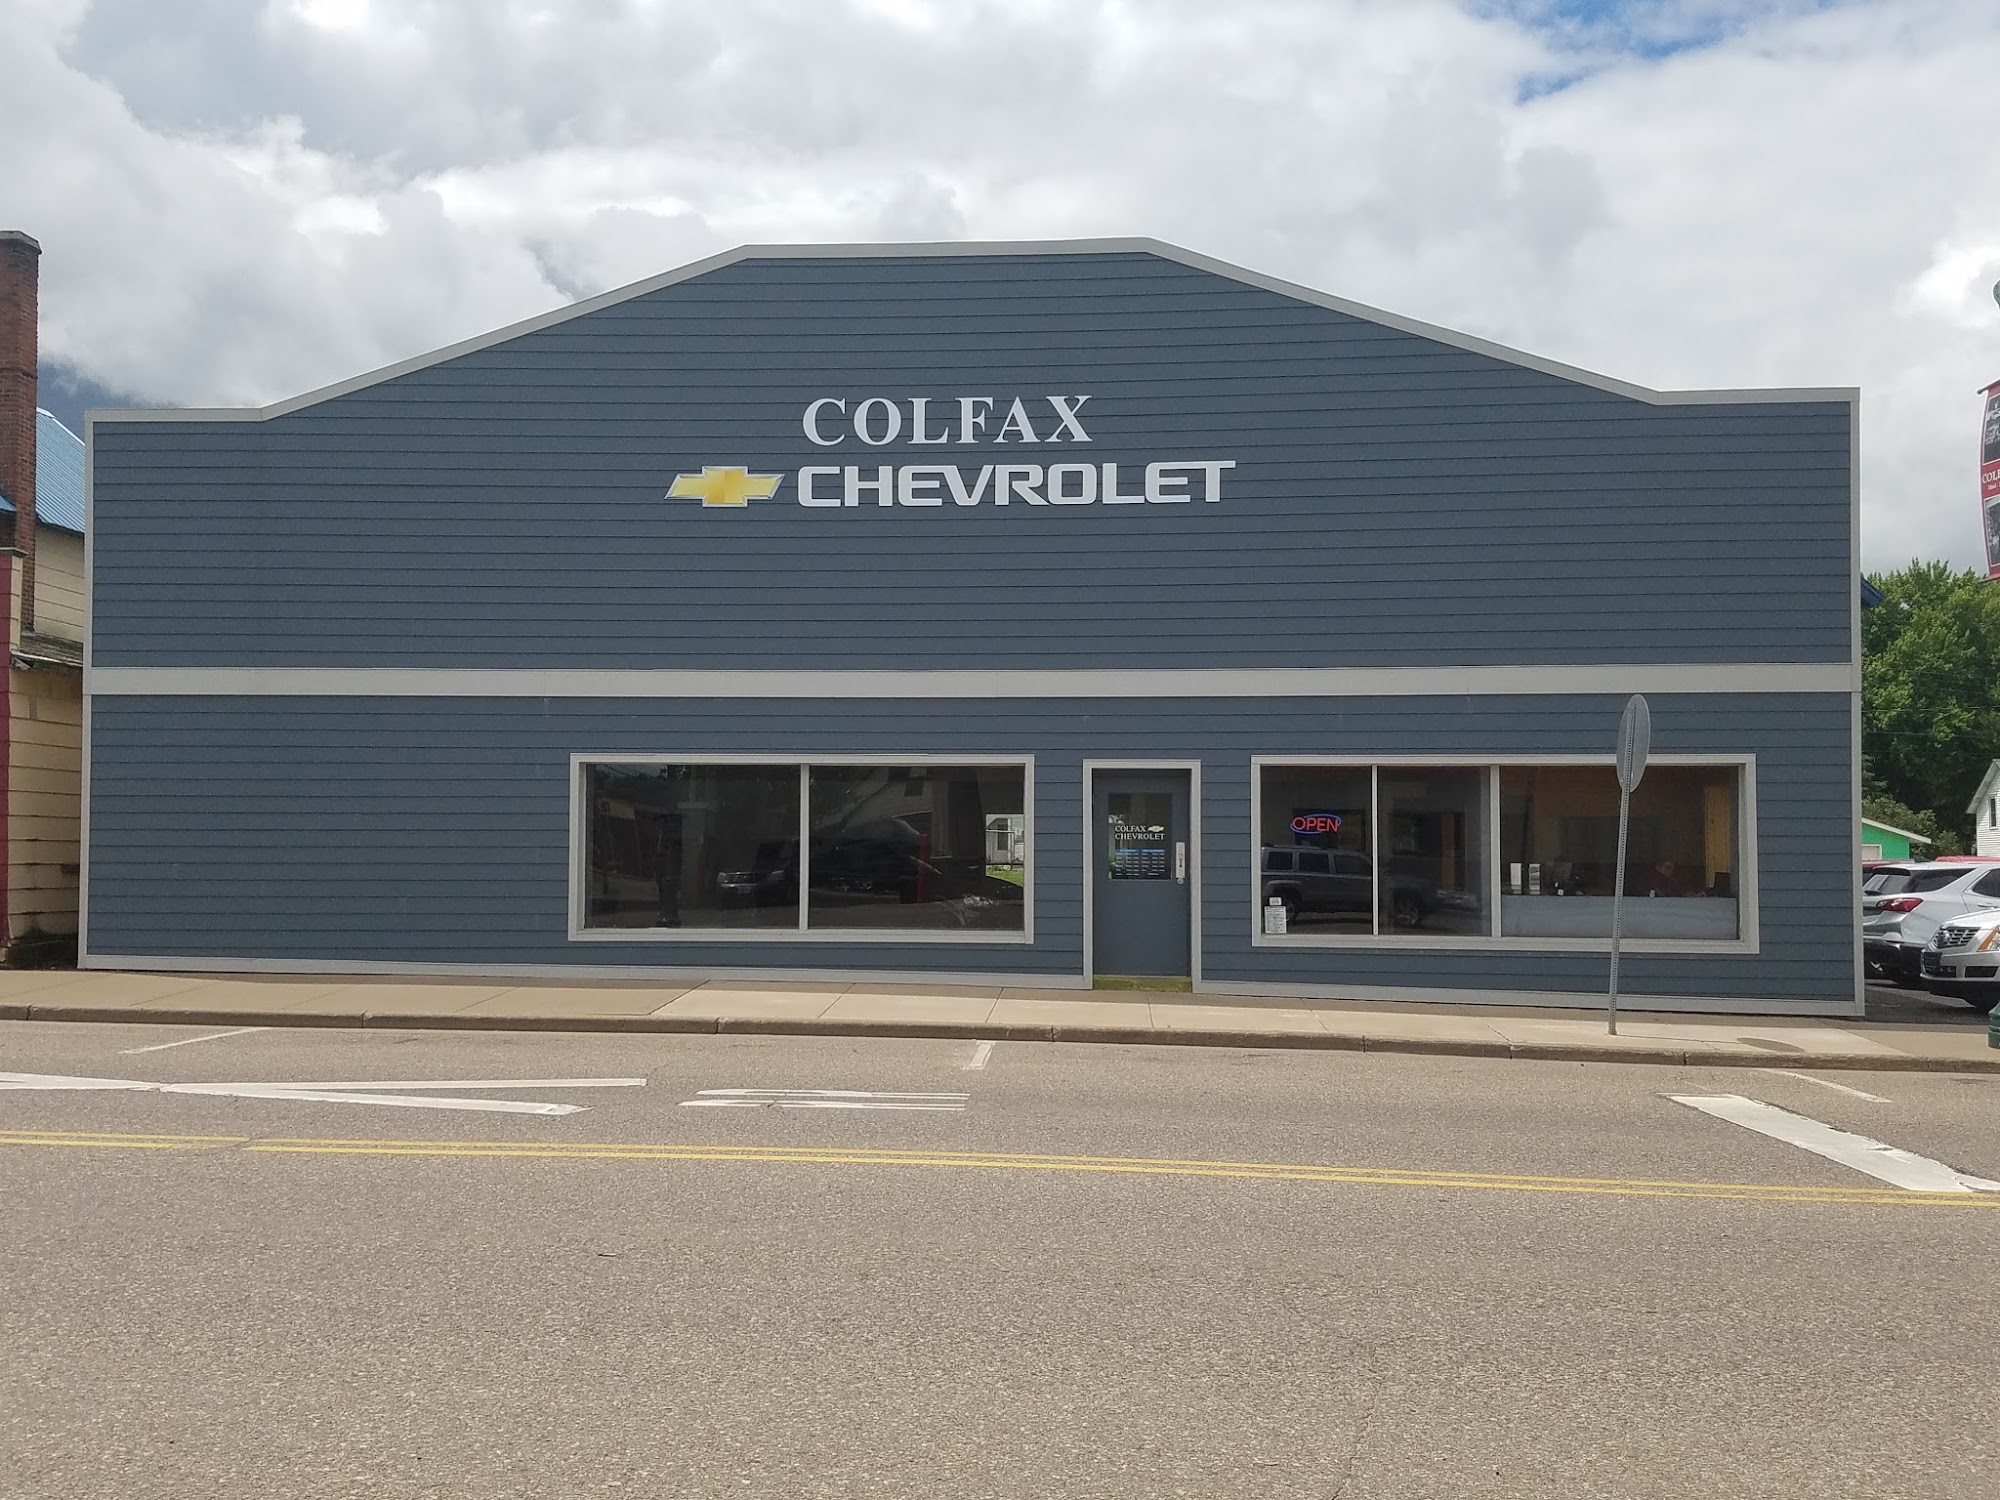 Colfax Chevrolet